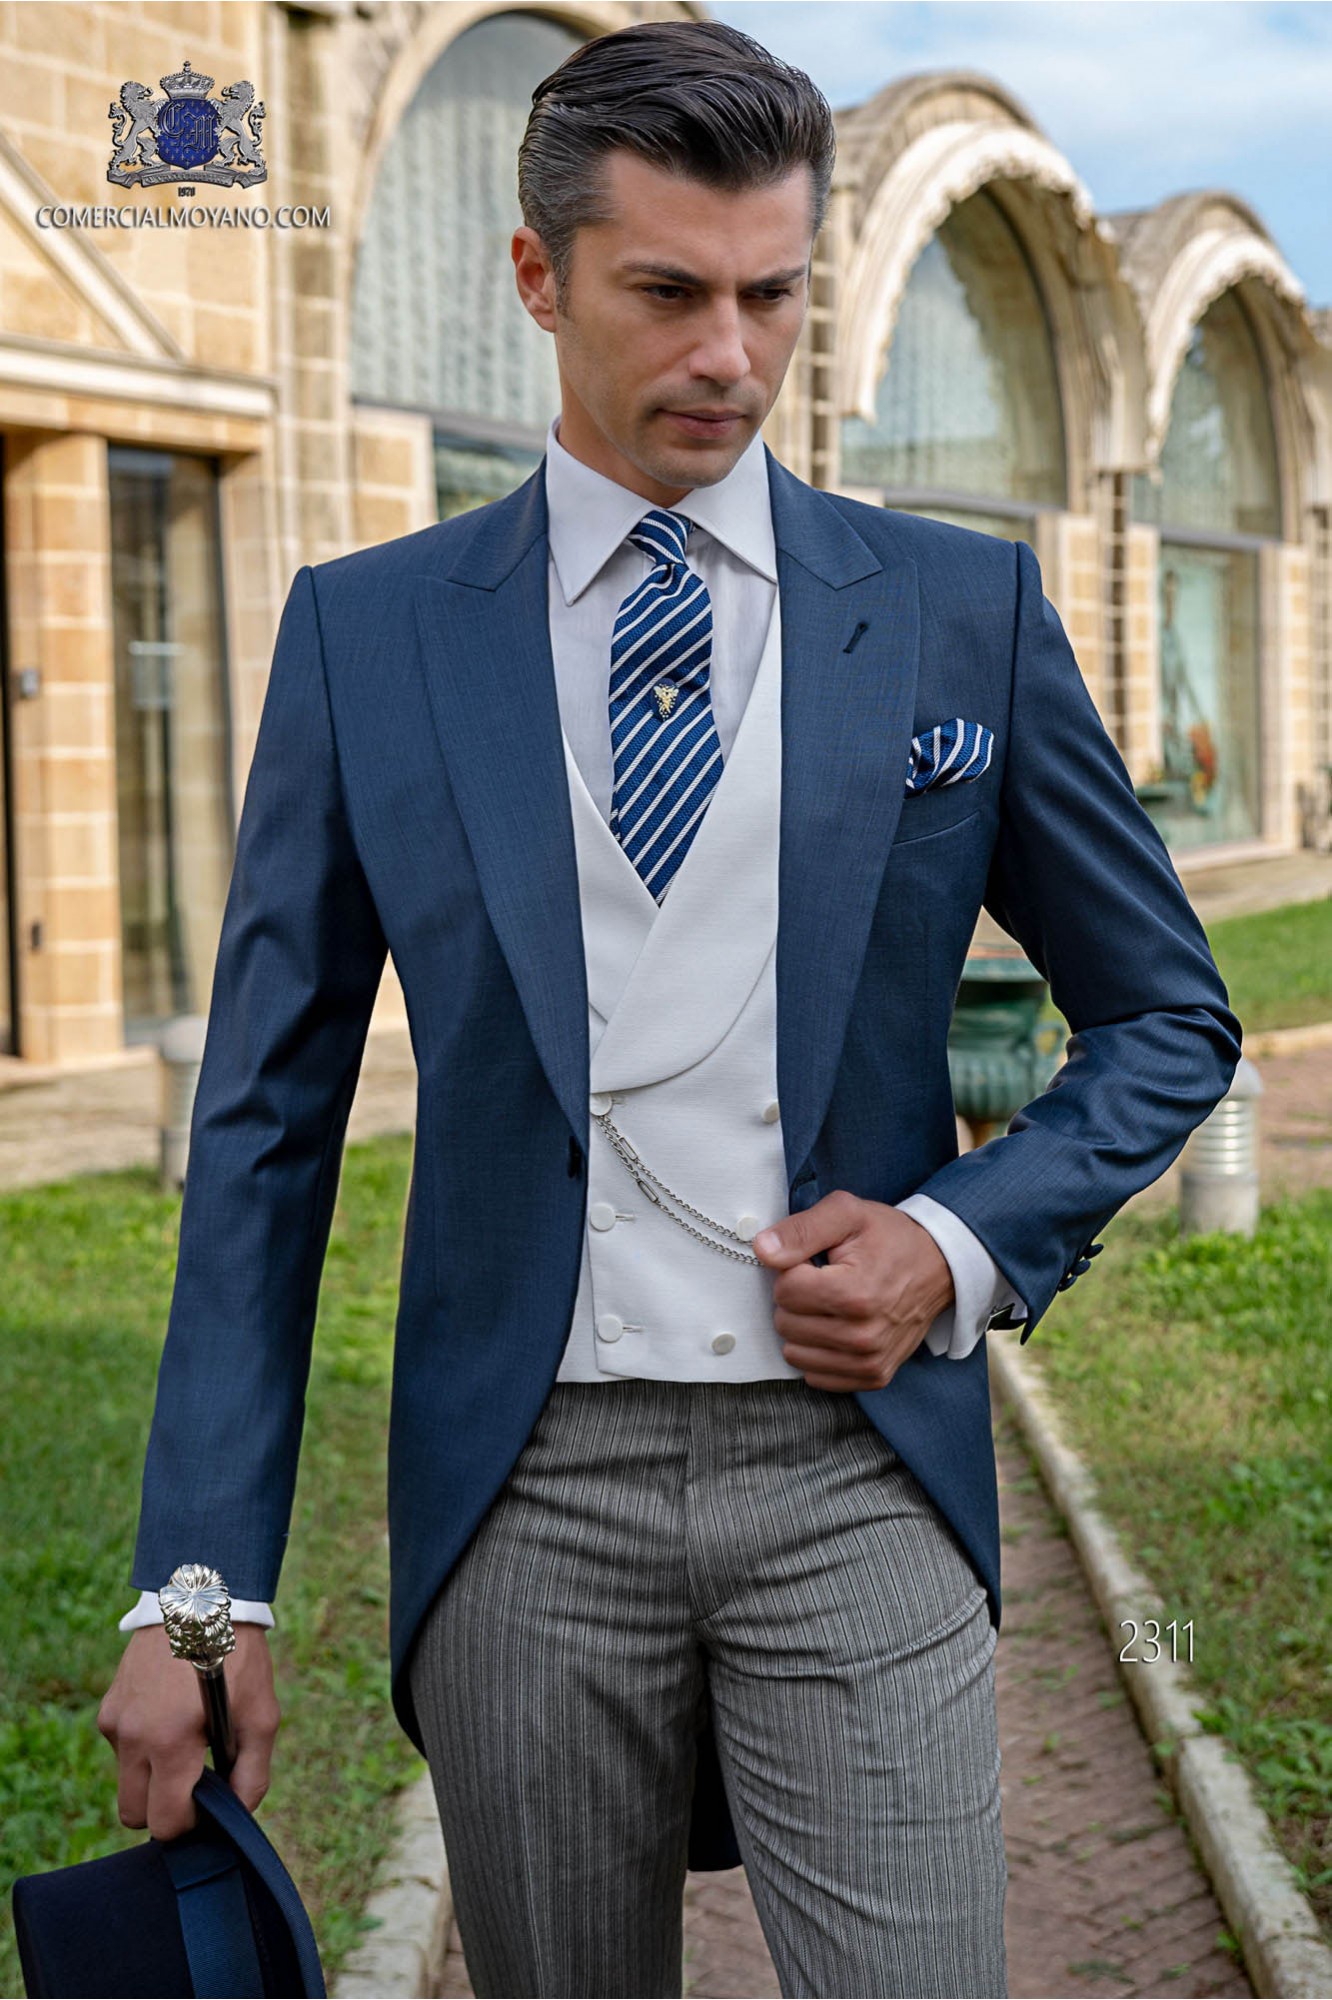 Tailored blue suit model 2311 Mario Moyano